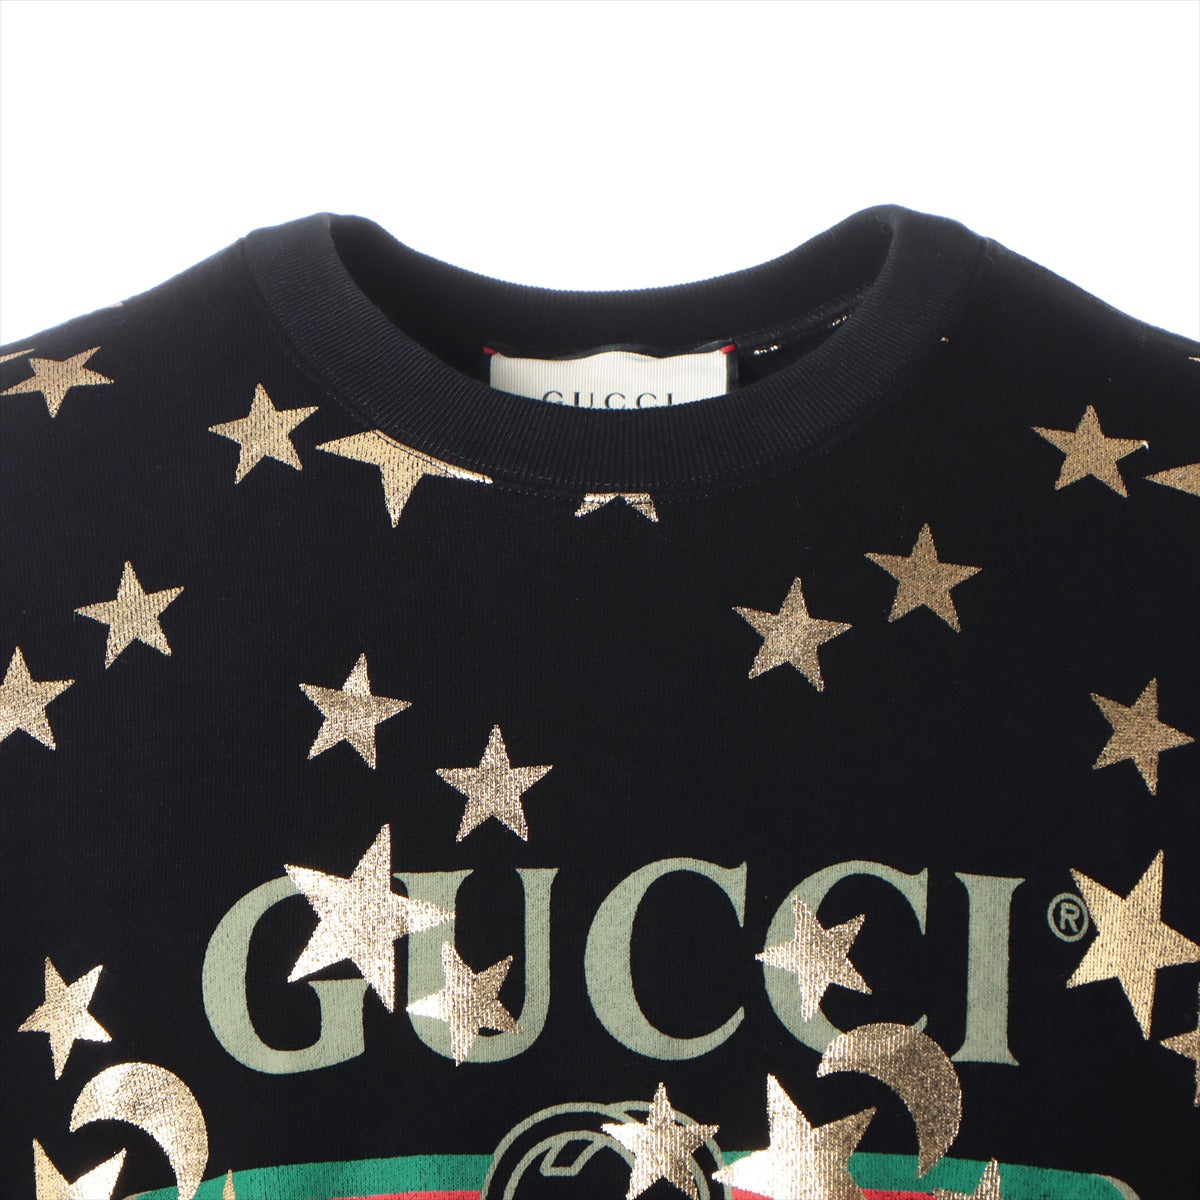 Gucci Interlocking G Cotton Basic knitted fabric M Men's Black  469250